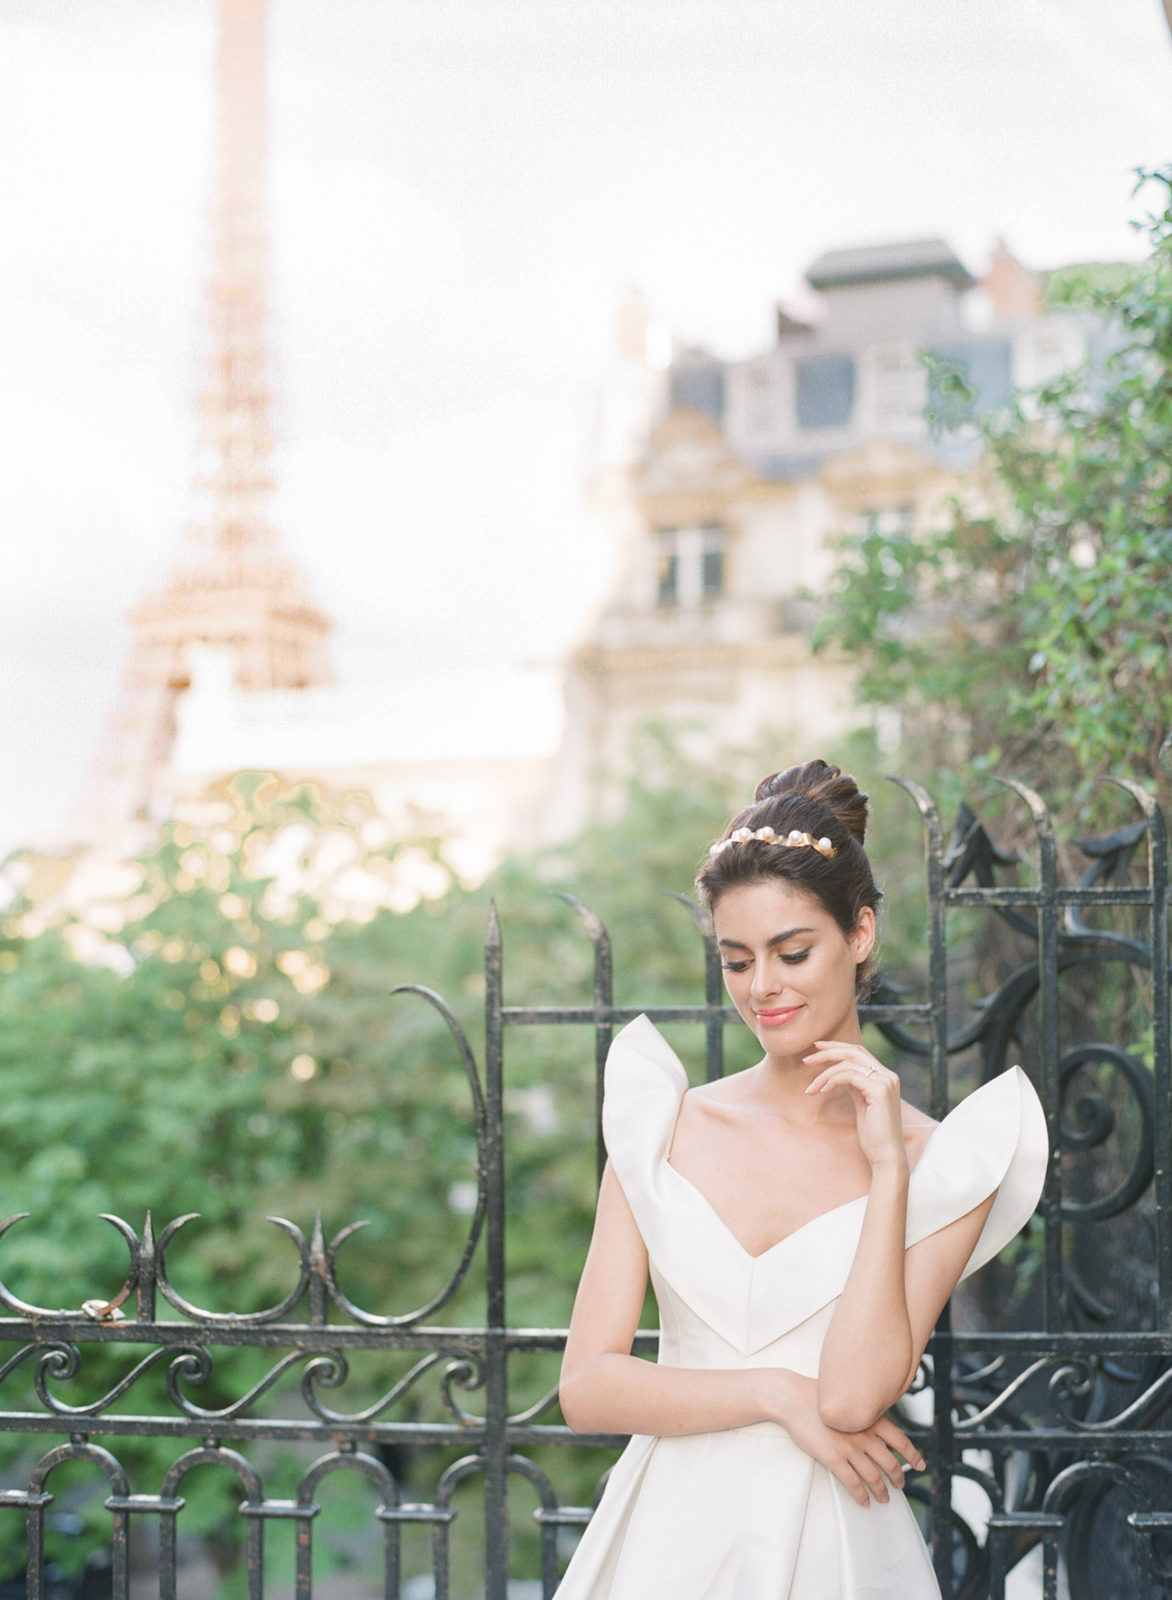 Musee Rodin Wedding Photographer | Paris Garden Wedding Photography | Paris Film Photographer | France Wedding Photography | Molly Carr Photography | Paris Outdoor Wedding | Lihi Hod Wedding Dress | Bride at Eiffel Tower